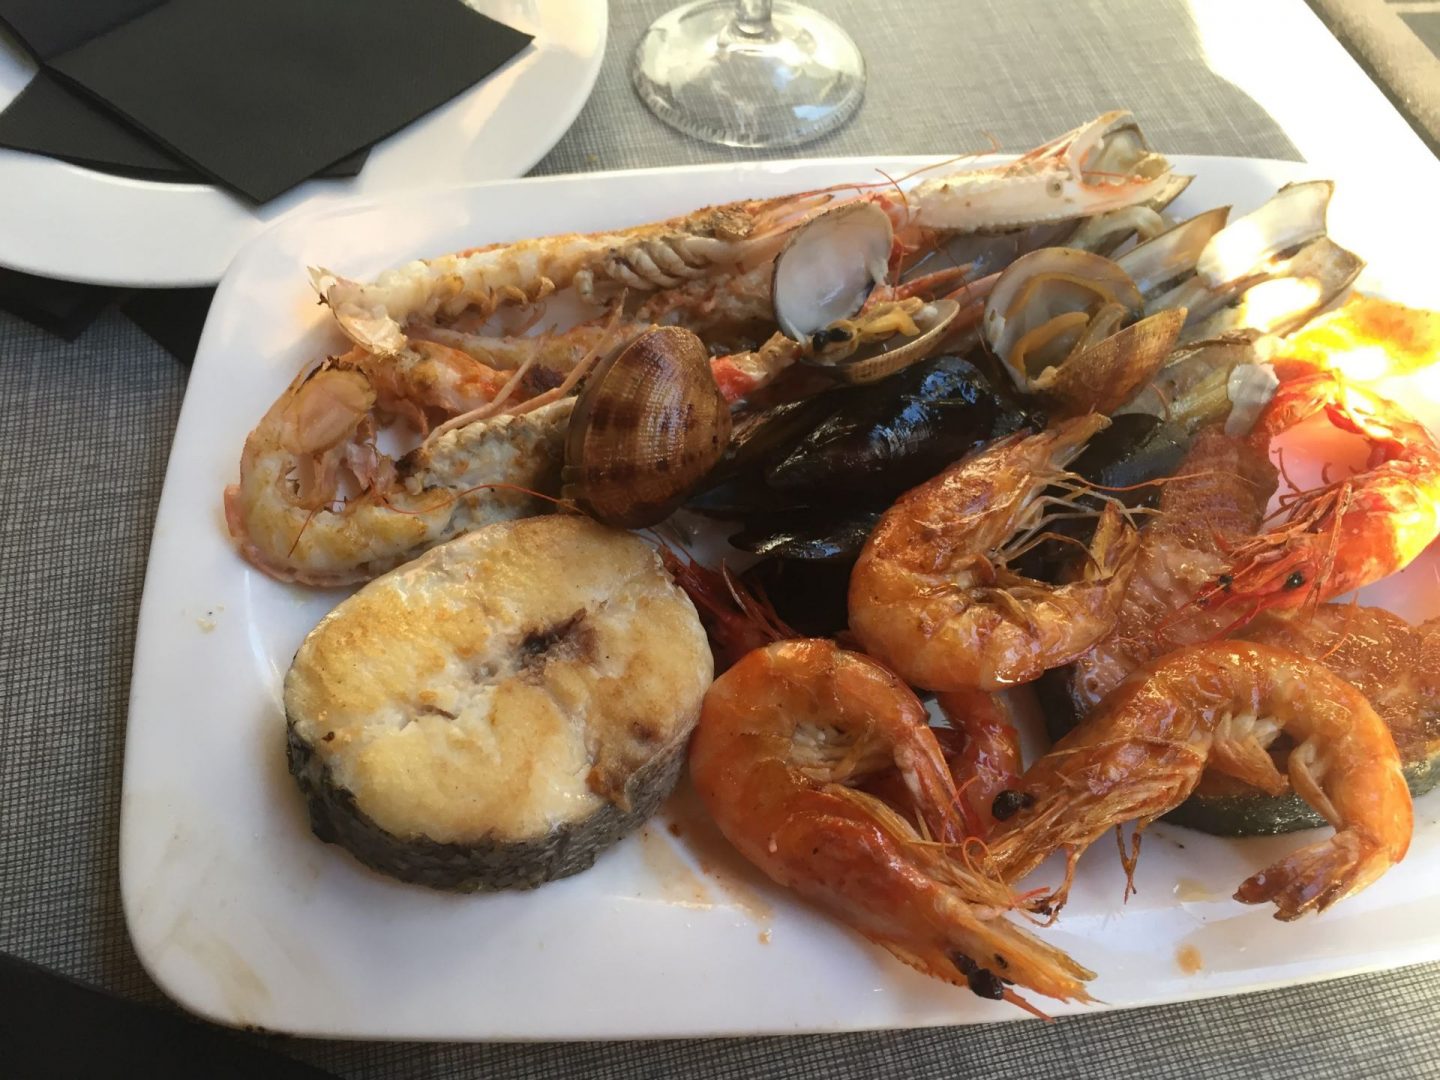 Fish platter at La Rambla, Barcelona